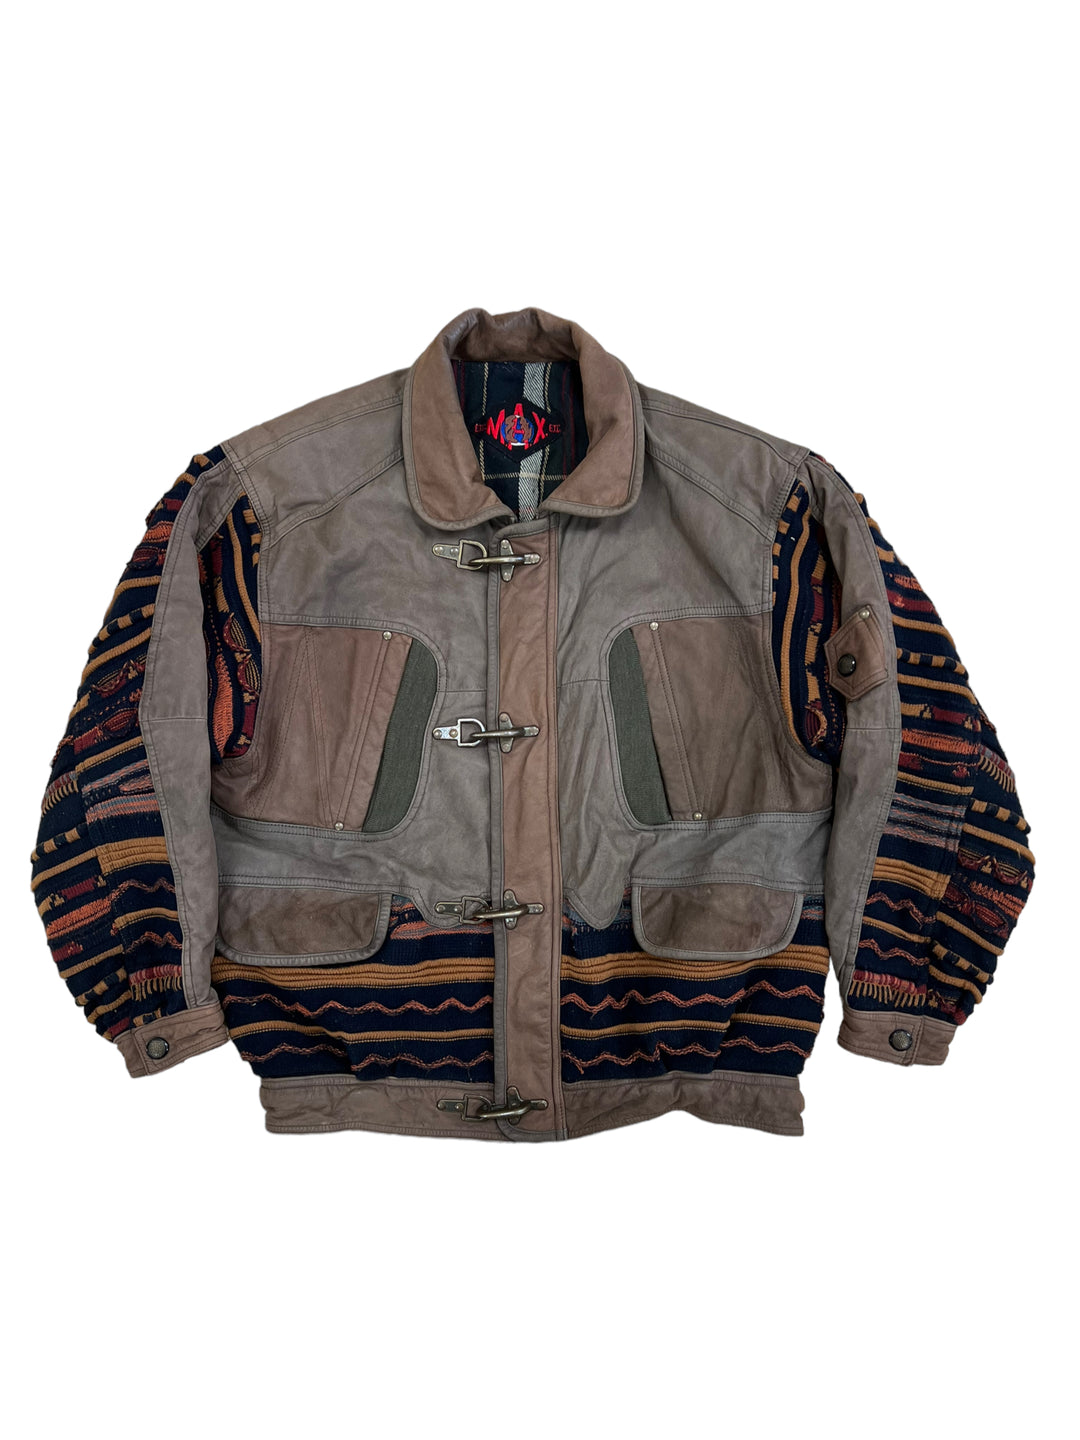 Vintage Wool & Leather Jacket Men’s Large